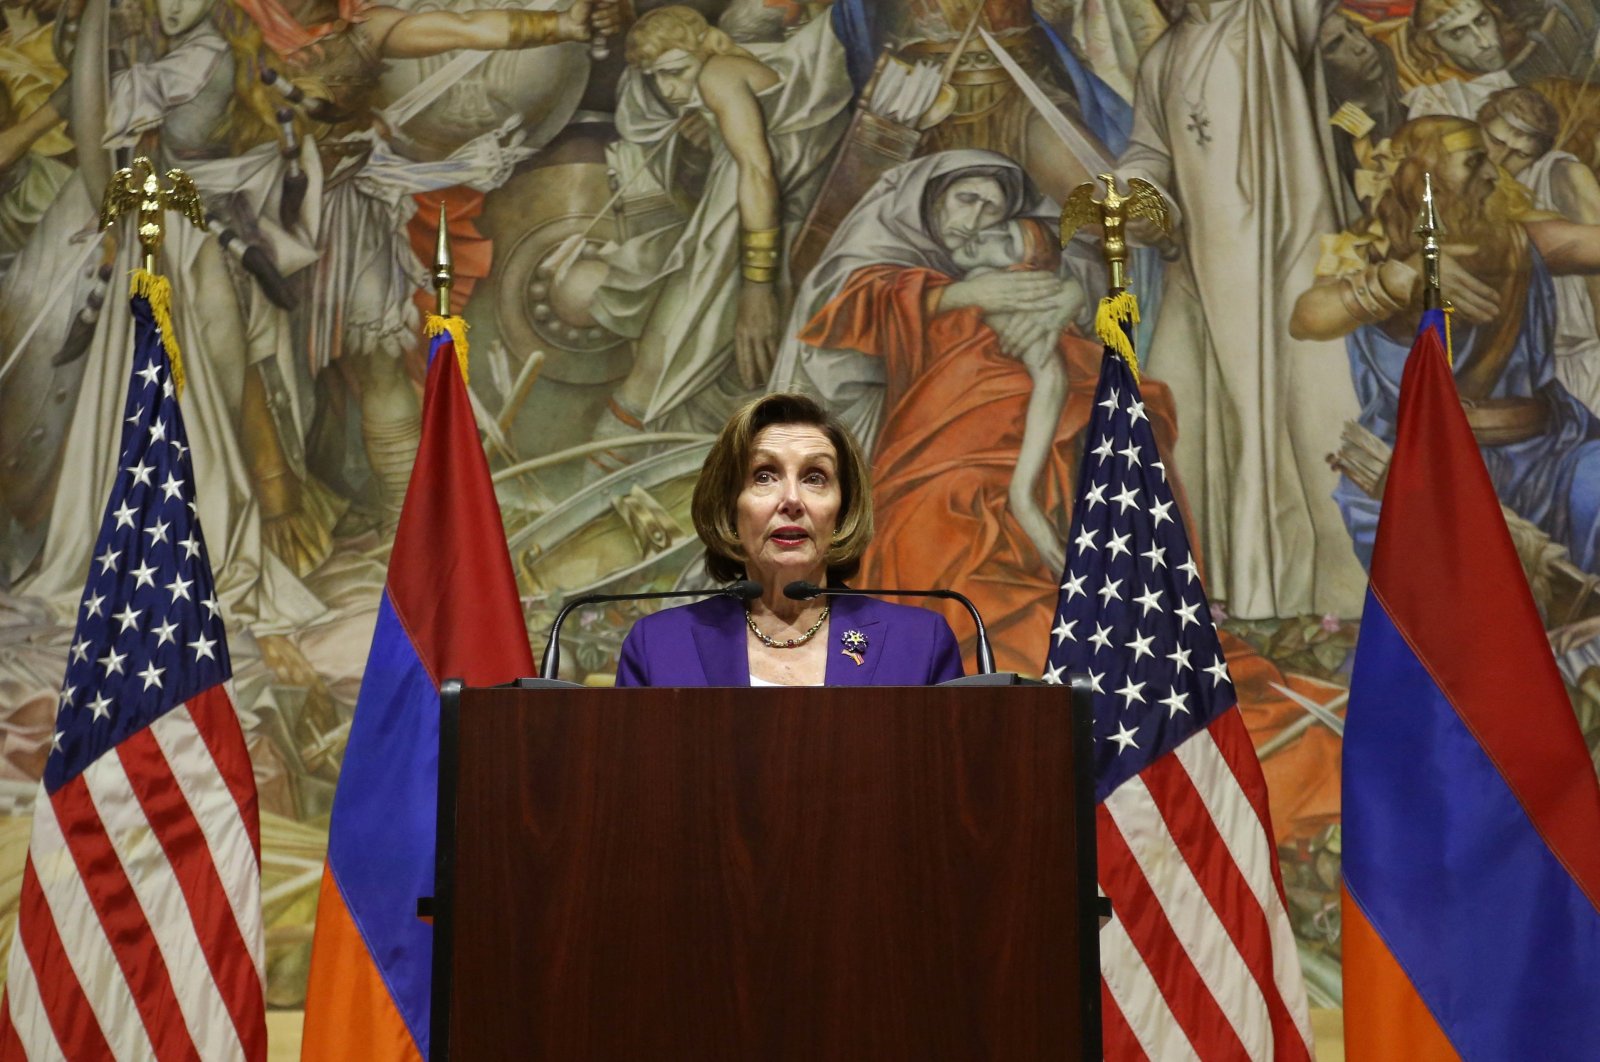 U.S. House of Representatives Speaker Nancy Pelosi makes speaks at the Cafesjian Center for the Arts in Yerevan, Armenia, Sept.18, 2022. (Reuters Photo)